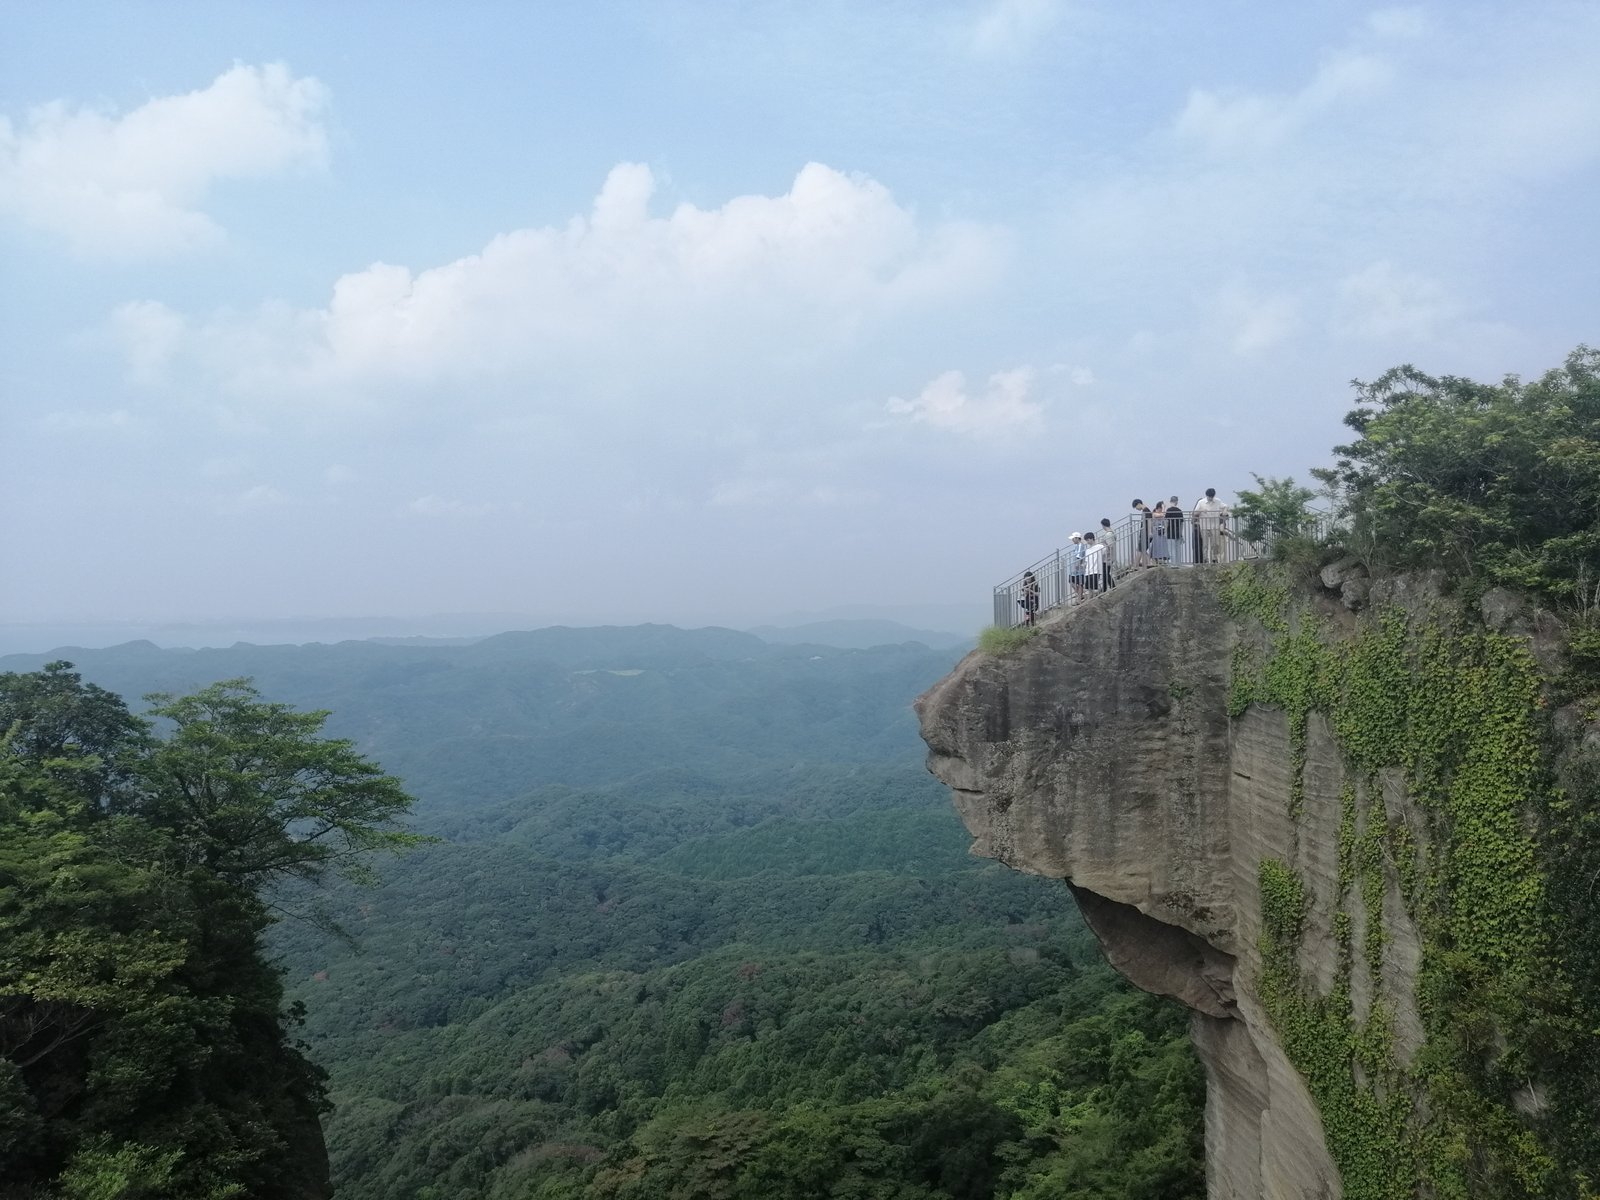 A view of a cliff on Nokogiriyama